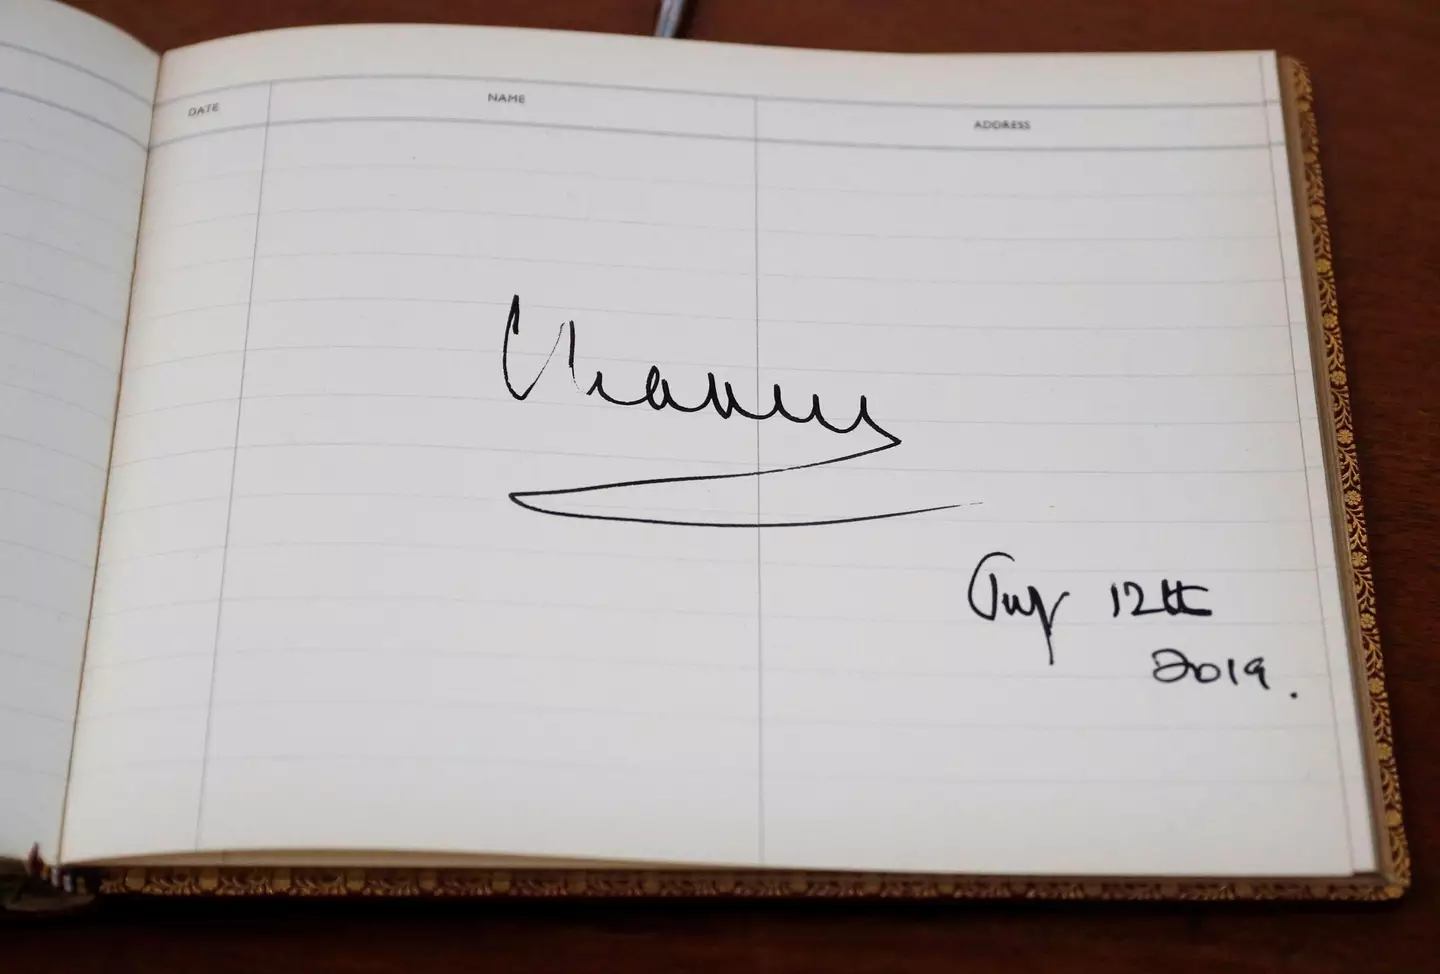 Charles' signature before becoming King.